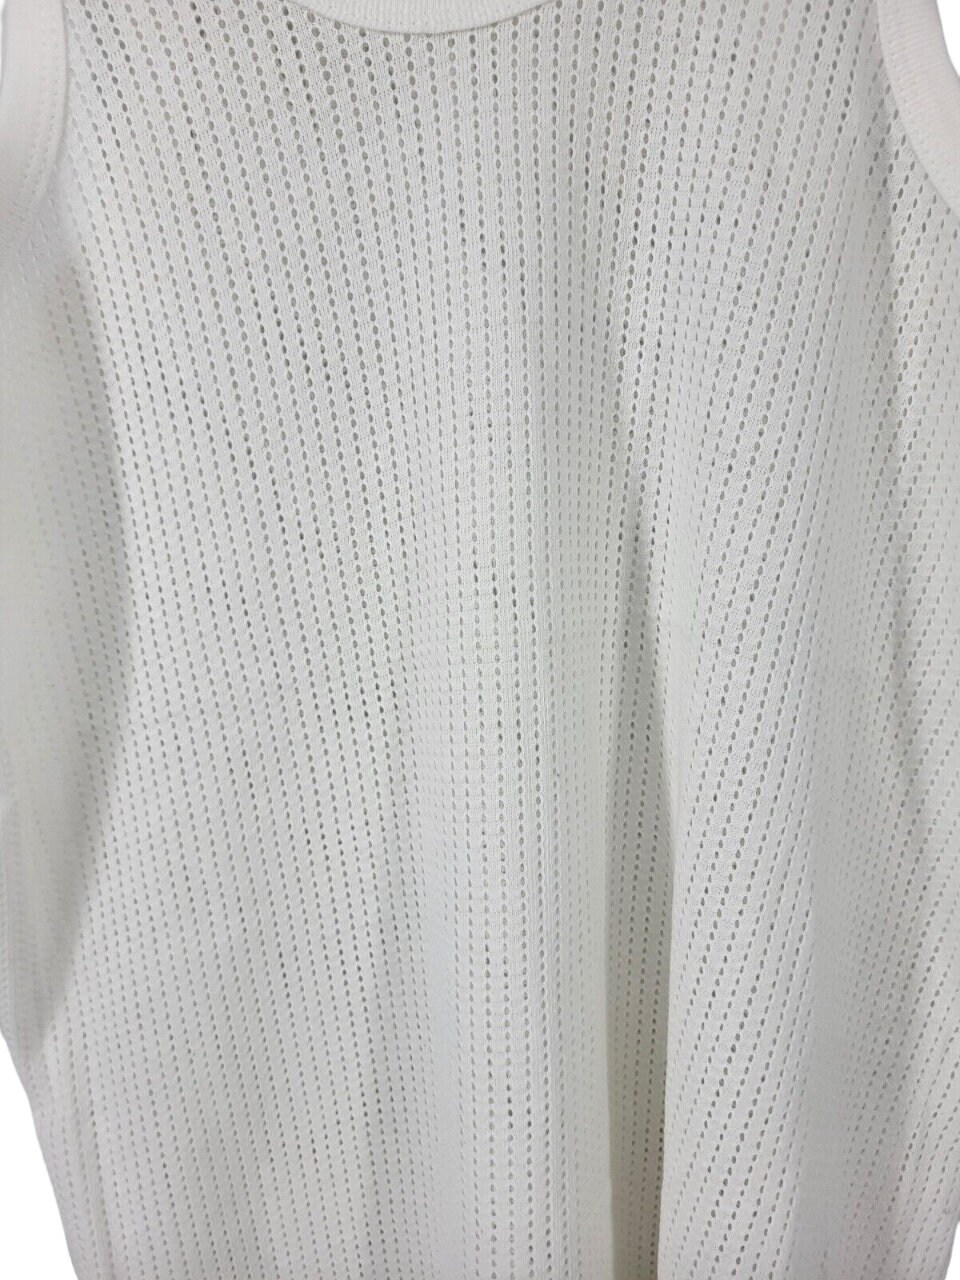 Mens Pendeen Vest Top Shirt Premium 100% Cotton Mesh Fishnet String ...